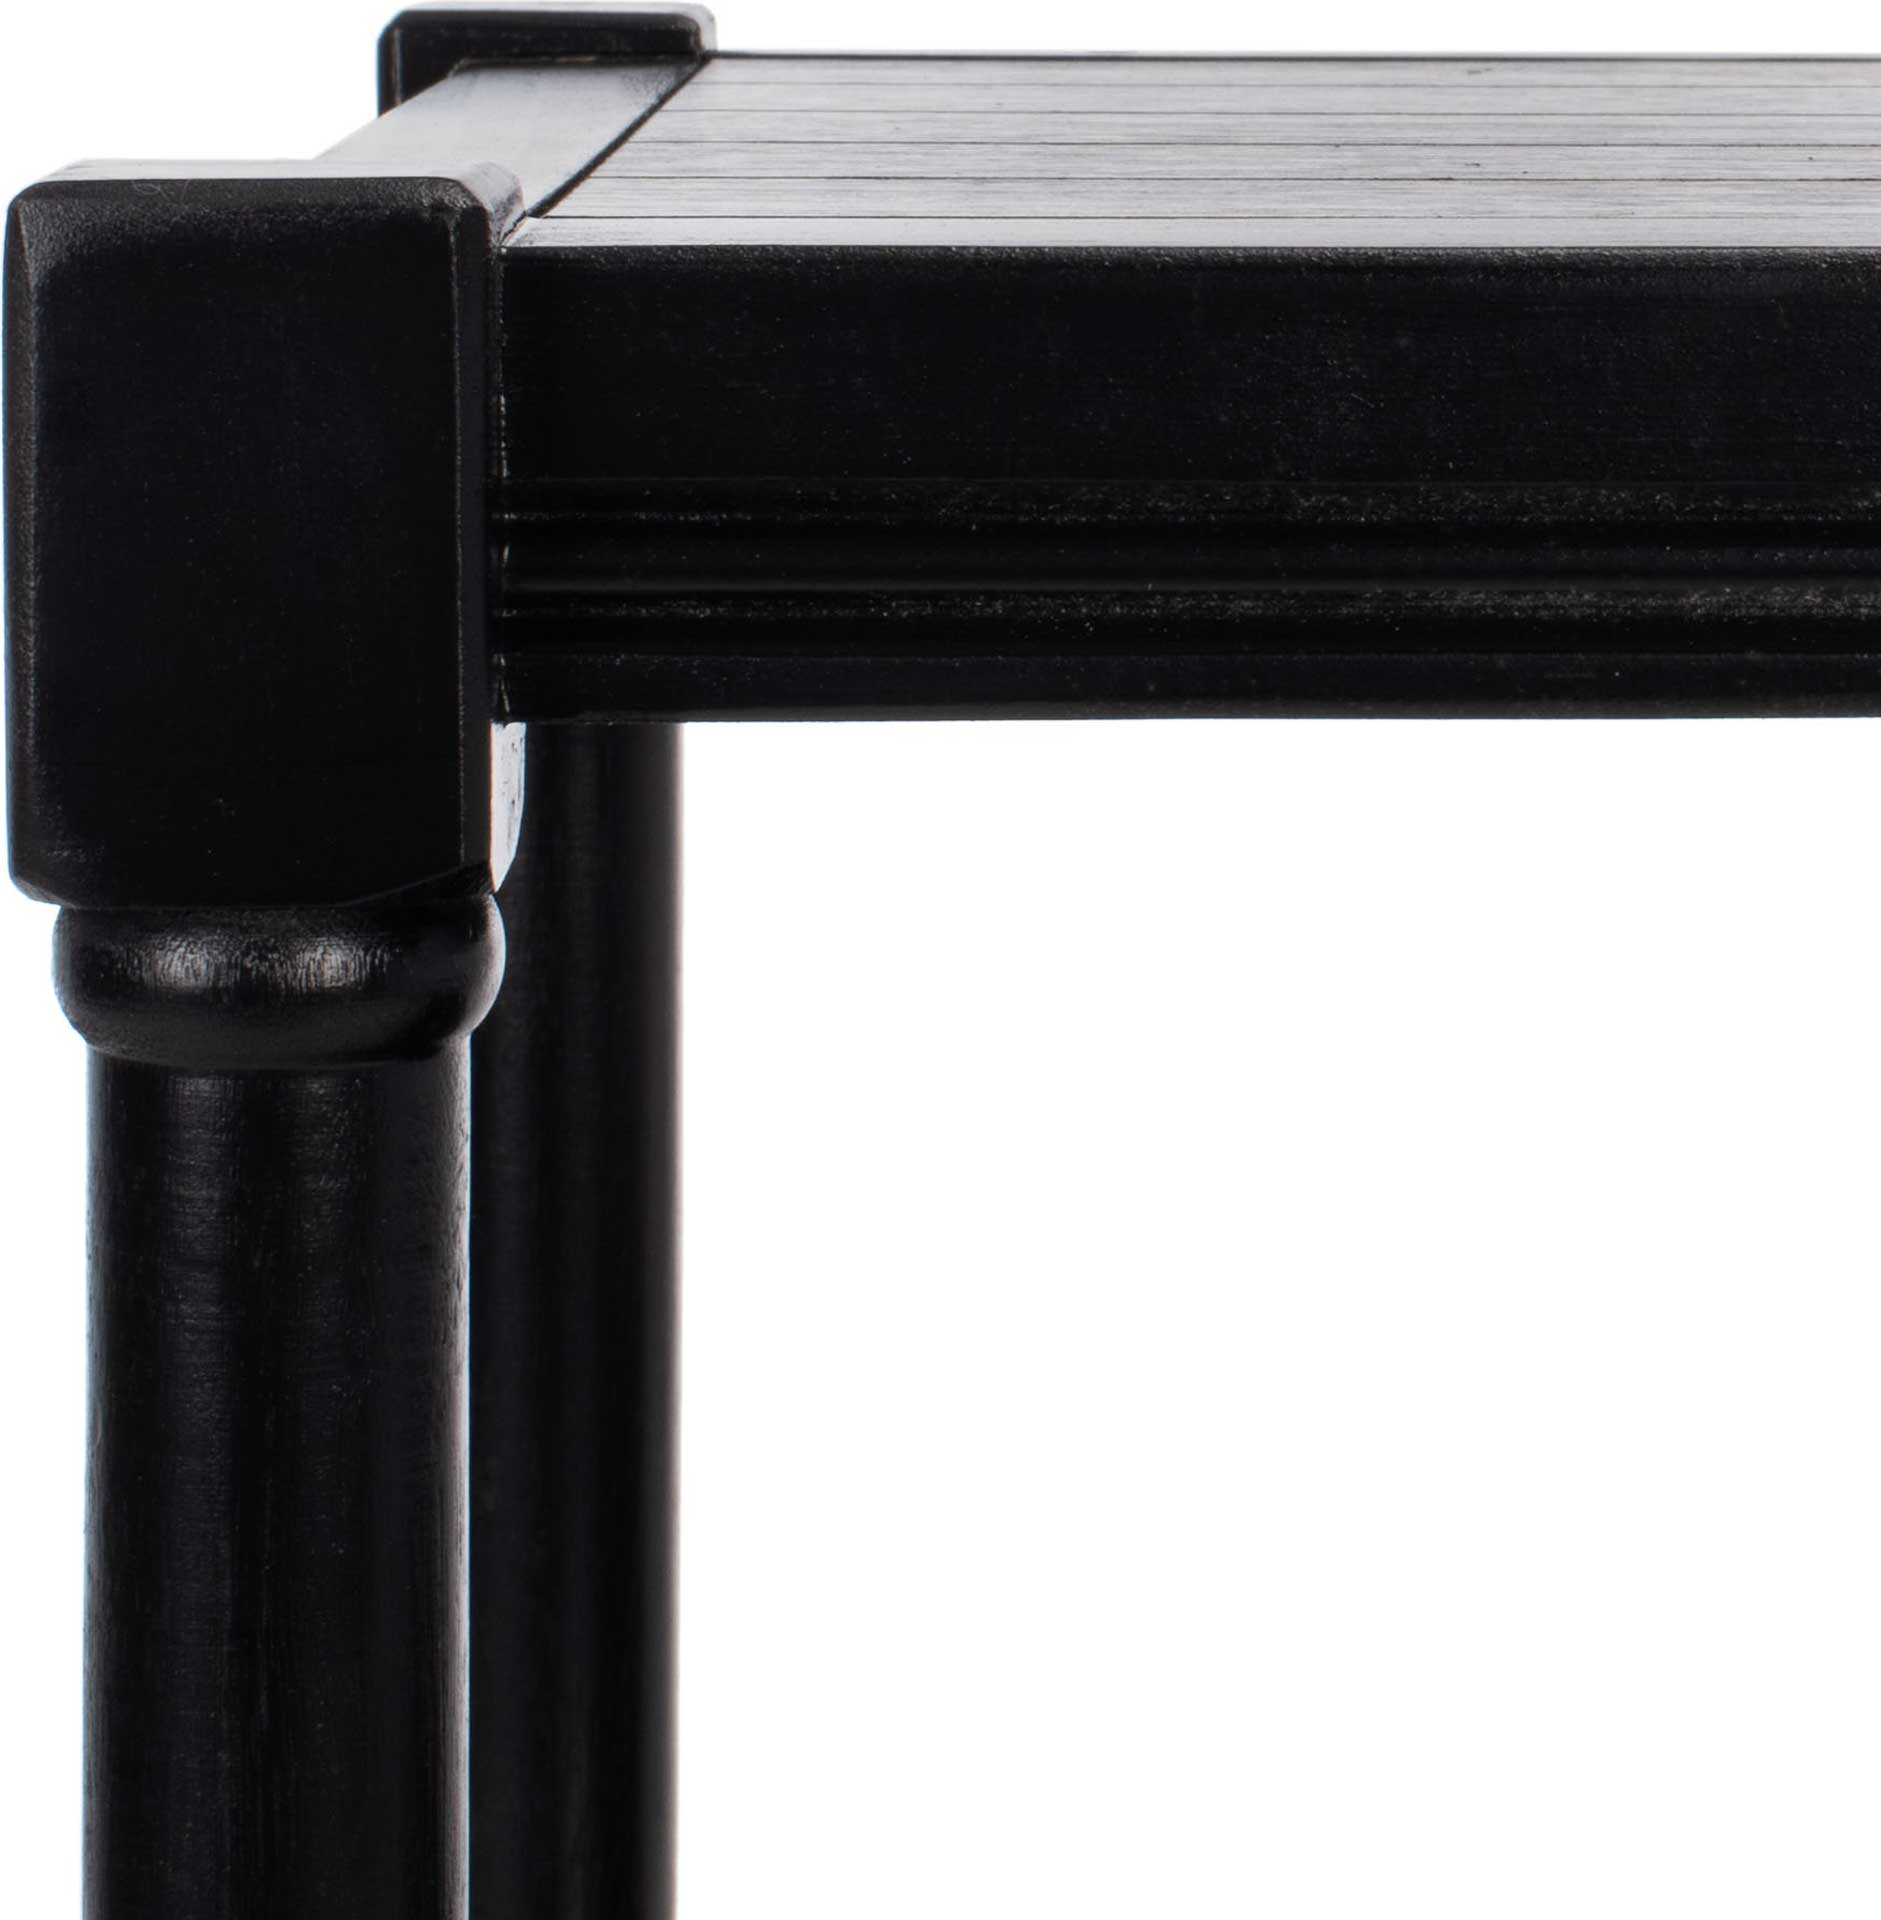 Radlin 3 Shelf Console Table Black